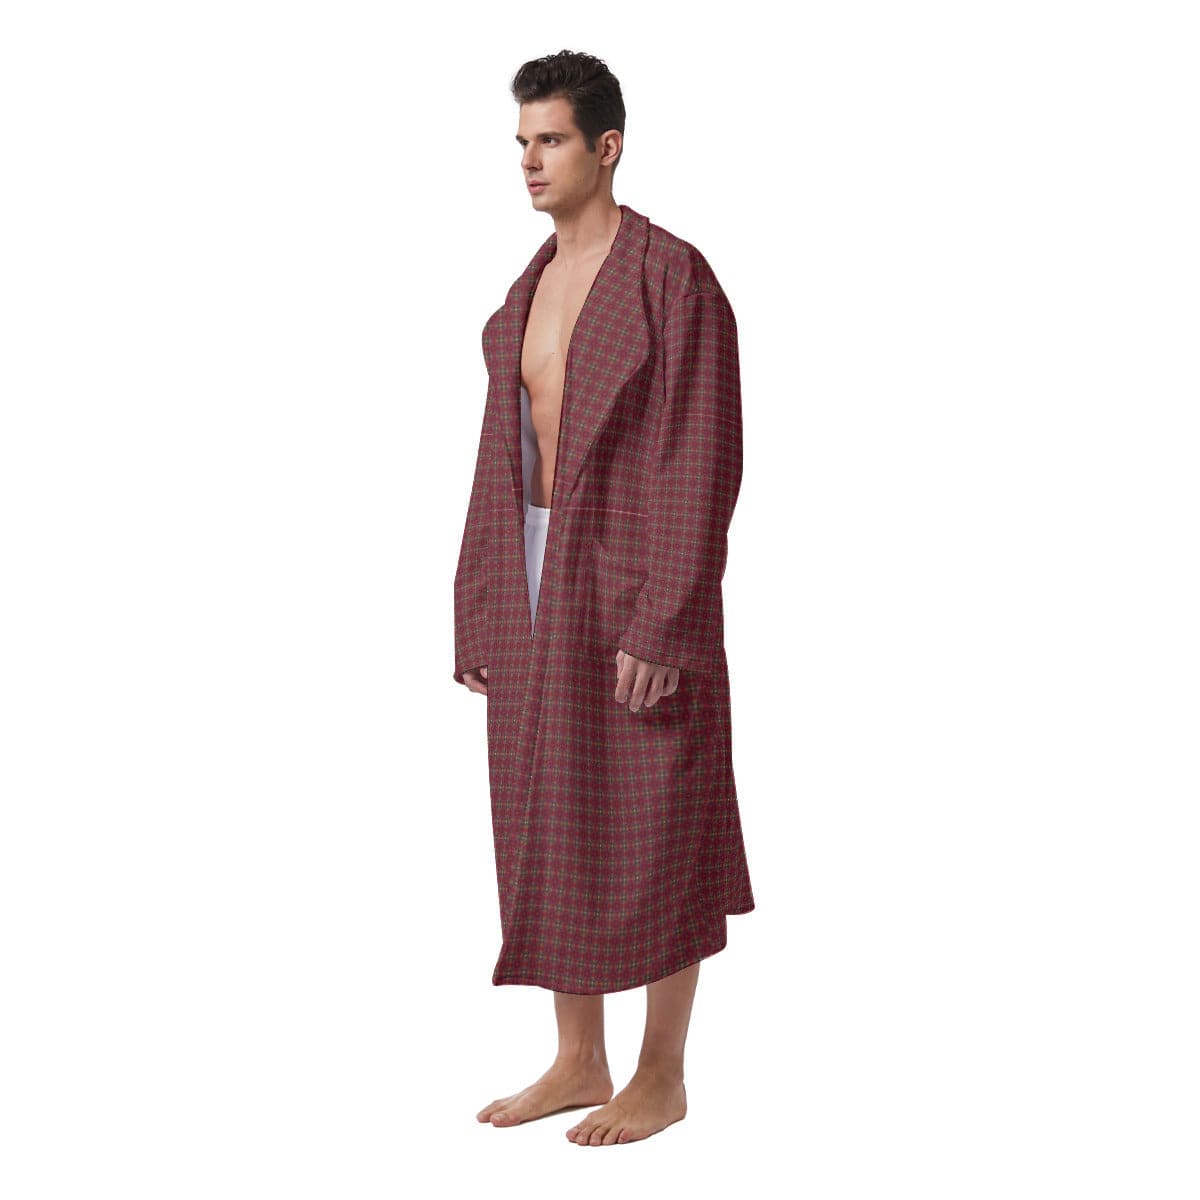 Wine red patterned Men's Heavy Fleece Robe, by Sensus Studio Design